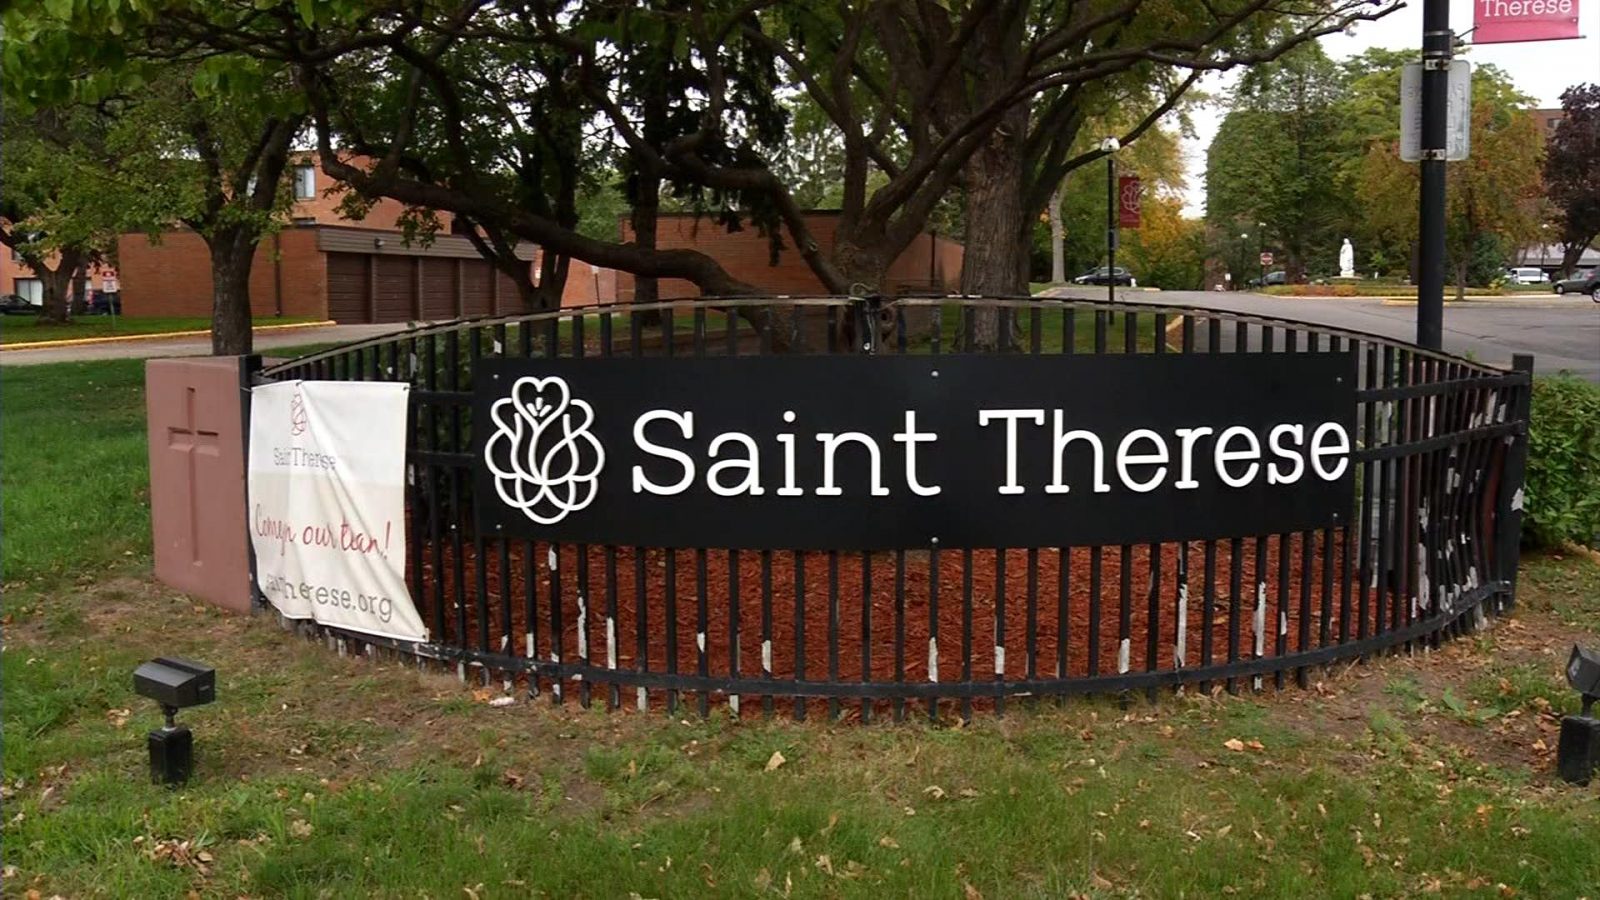 Saint Therese New Hope Senior campus